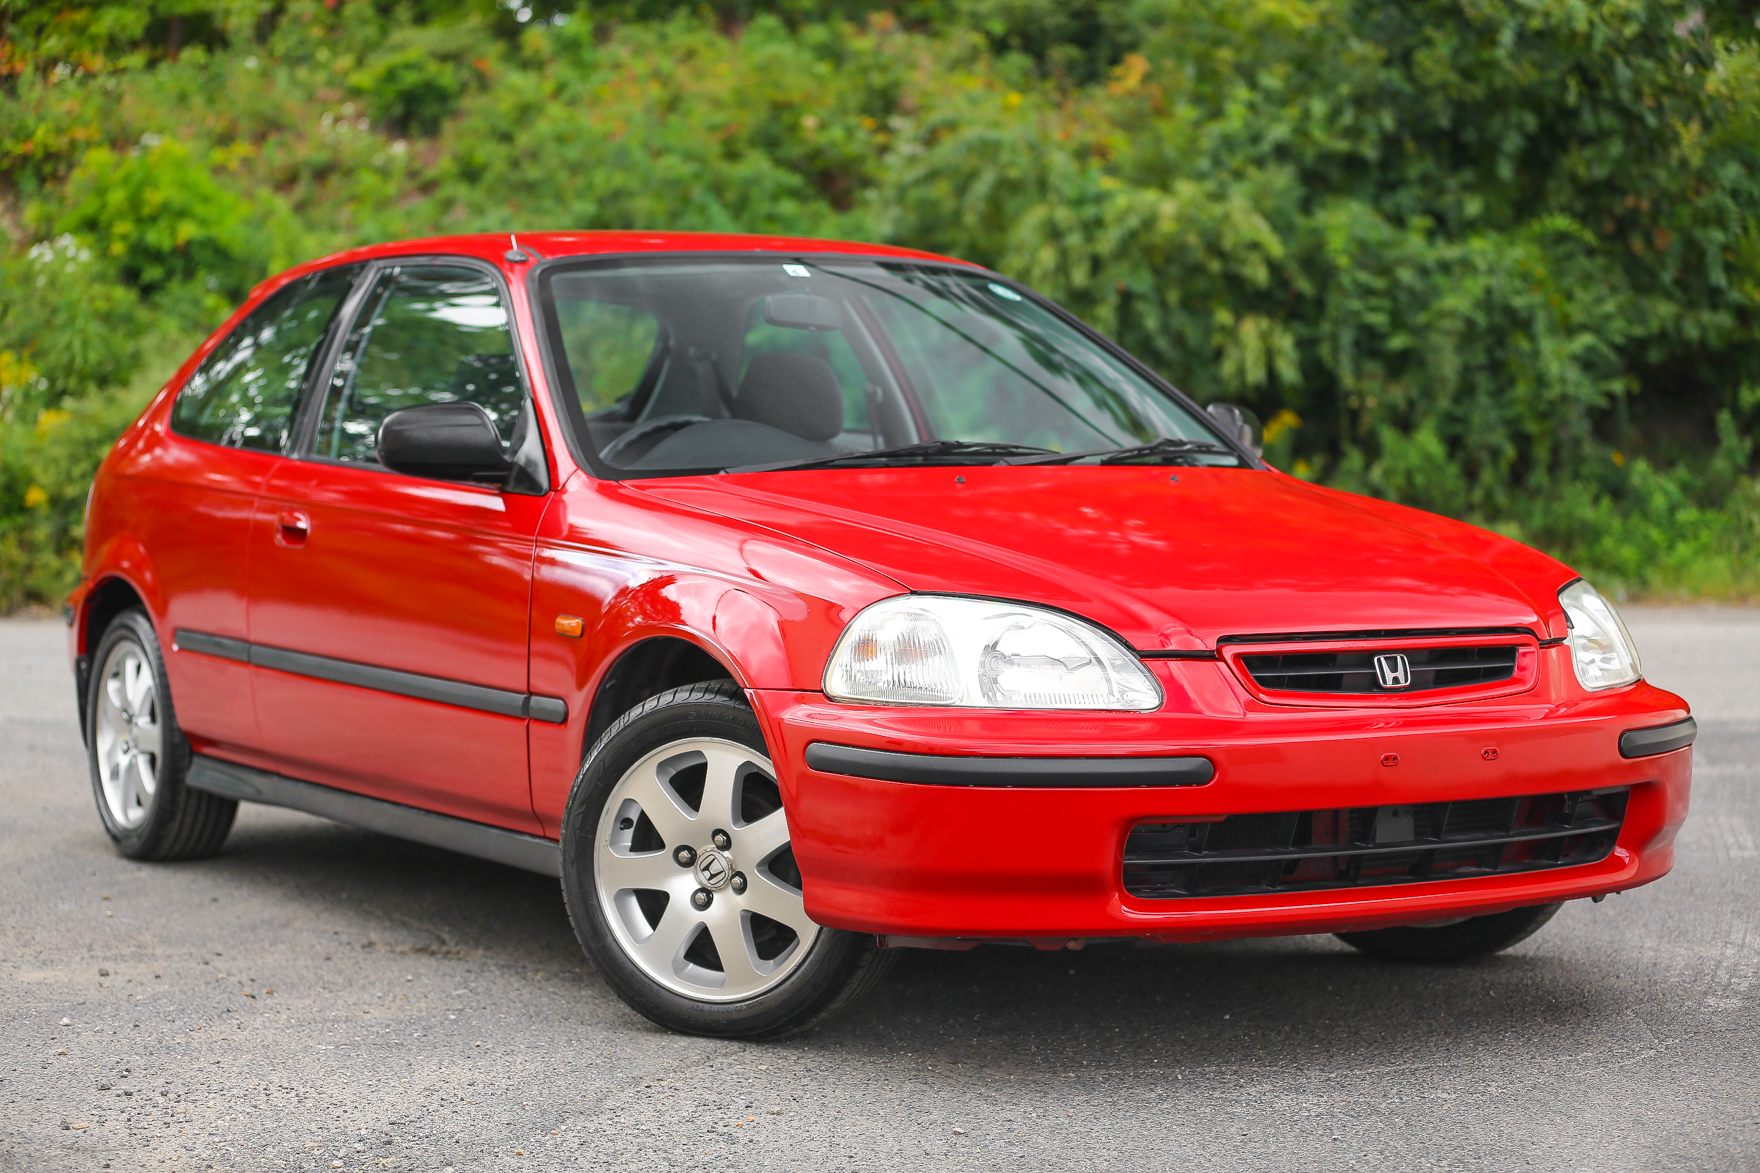 1997 Honda Civic EK Hatch - NEWLY RESTORED $17,500